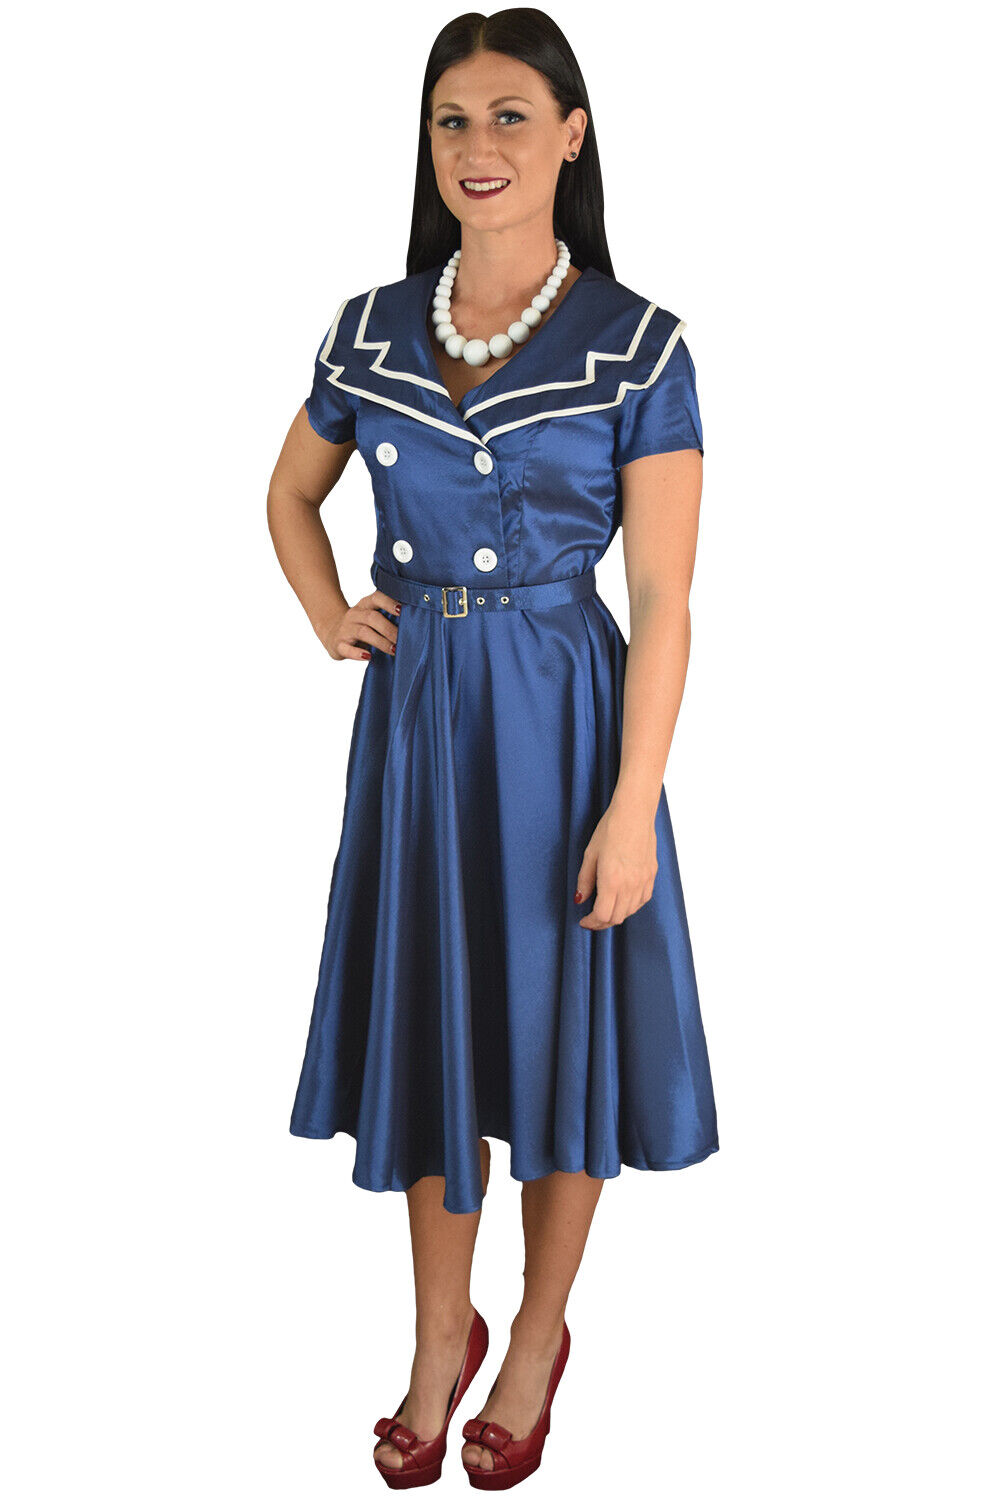 Vintage Retro Navy Sailor dress 1940s SWING FLARED PARTY retro Dress